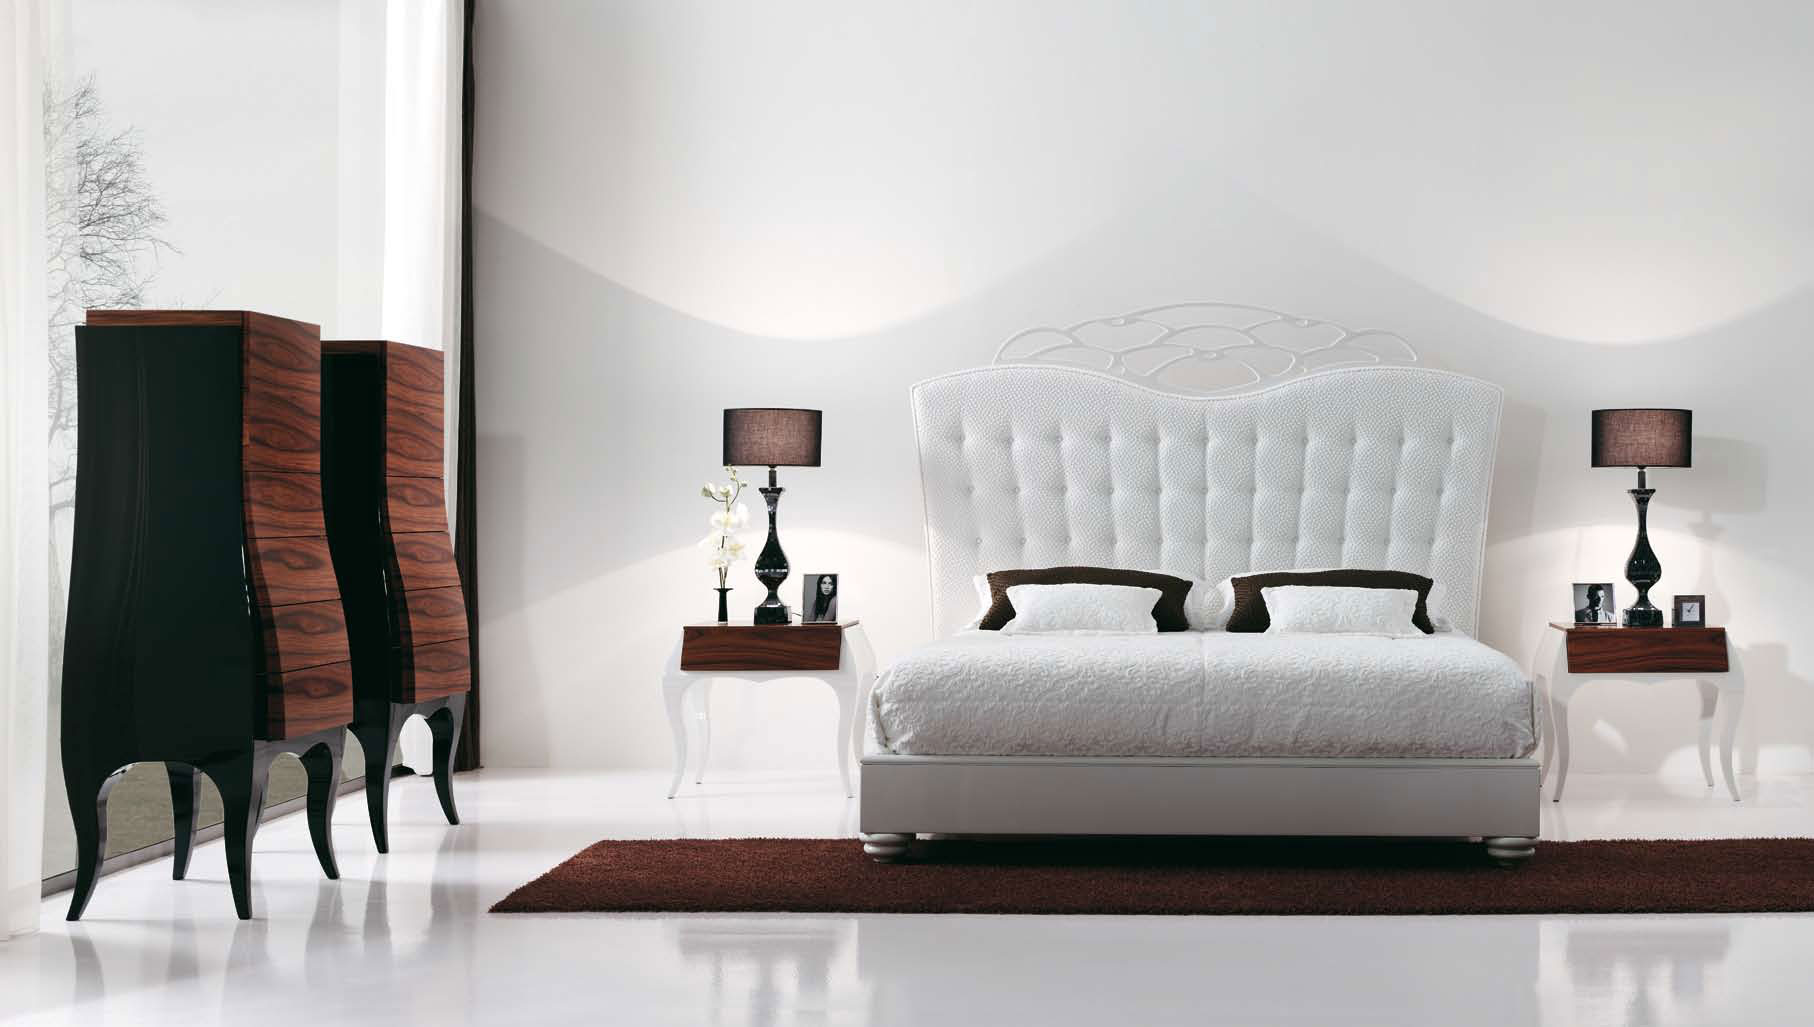 Remarkable Beautiful White Bedroom Designs 1814 x 1027 · 118 kB · jpeg